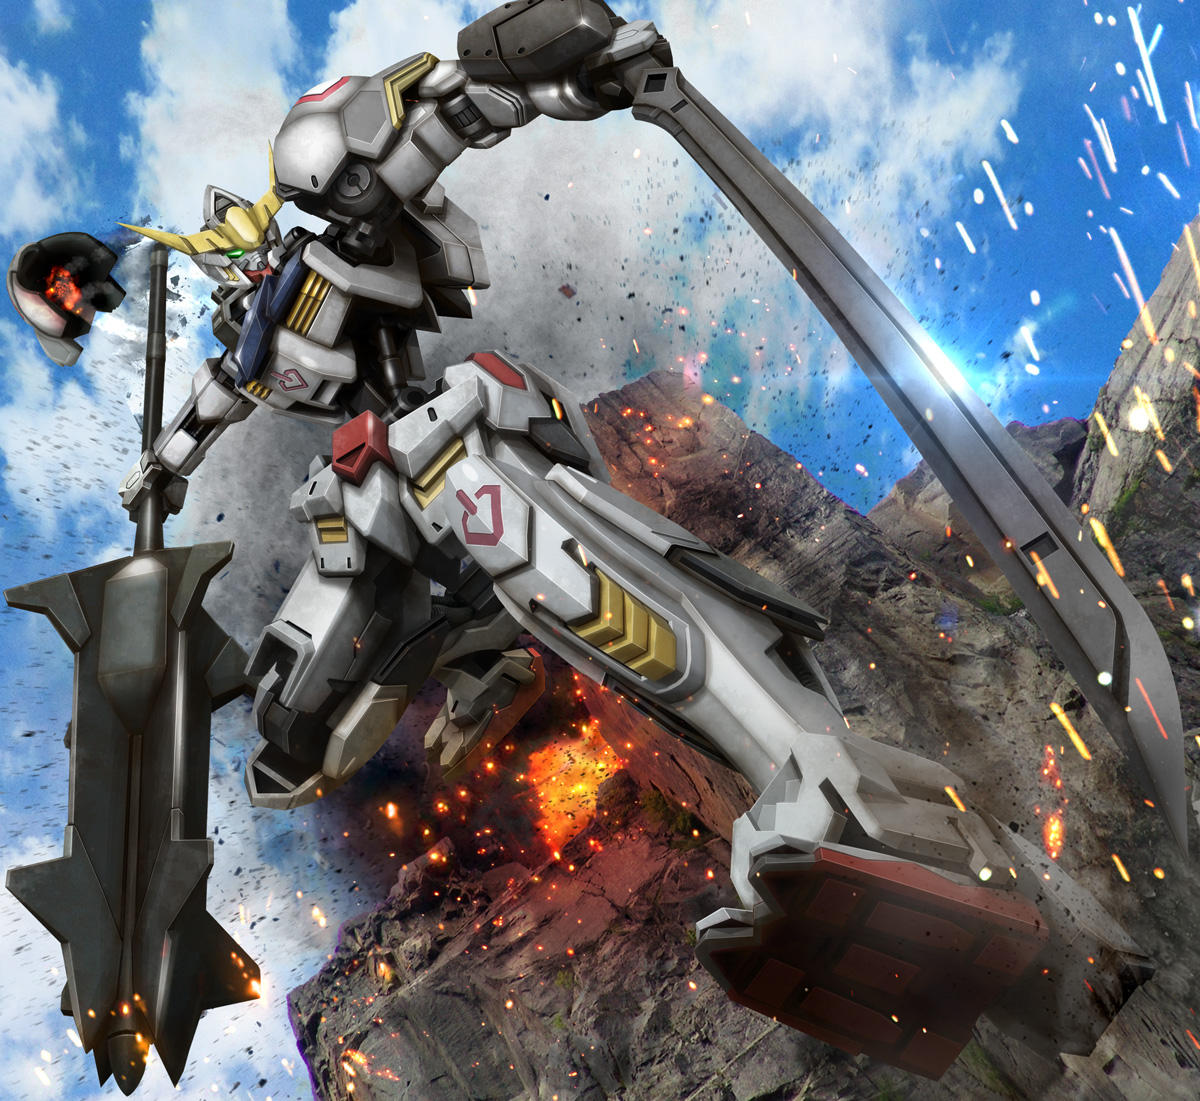 Mobile Suit Gundam: Iron-Blooded Orphans Backgrounds, Compatible - PC, Mobile, Gadgets| 1200x1101 px